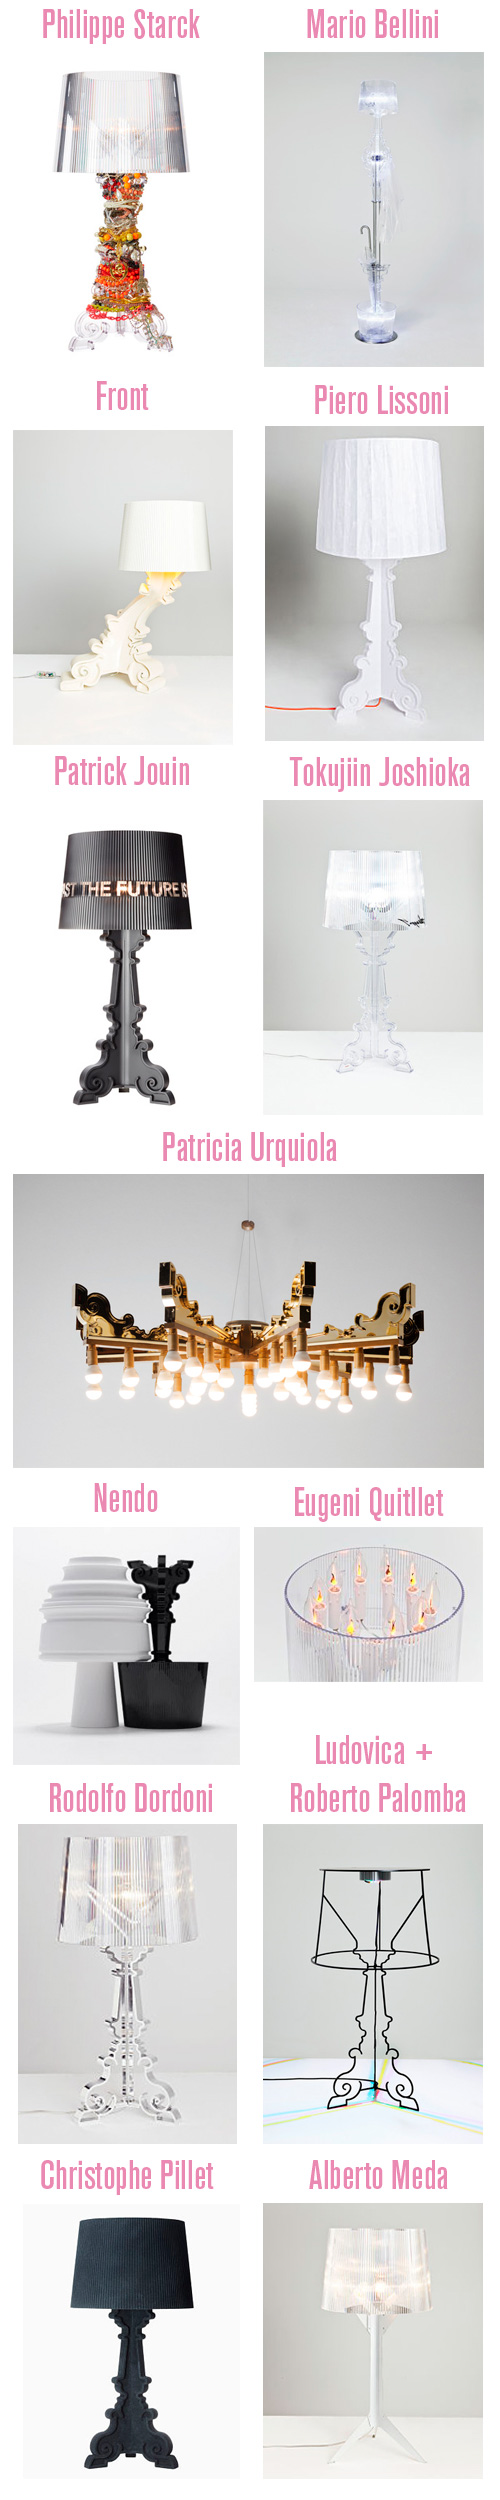 lampara_bourgie_kartell_diseño_blog_ana_pla_interiorismo_decoracion